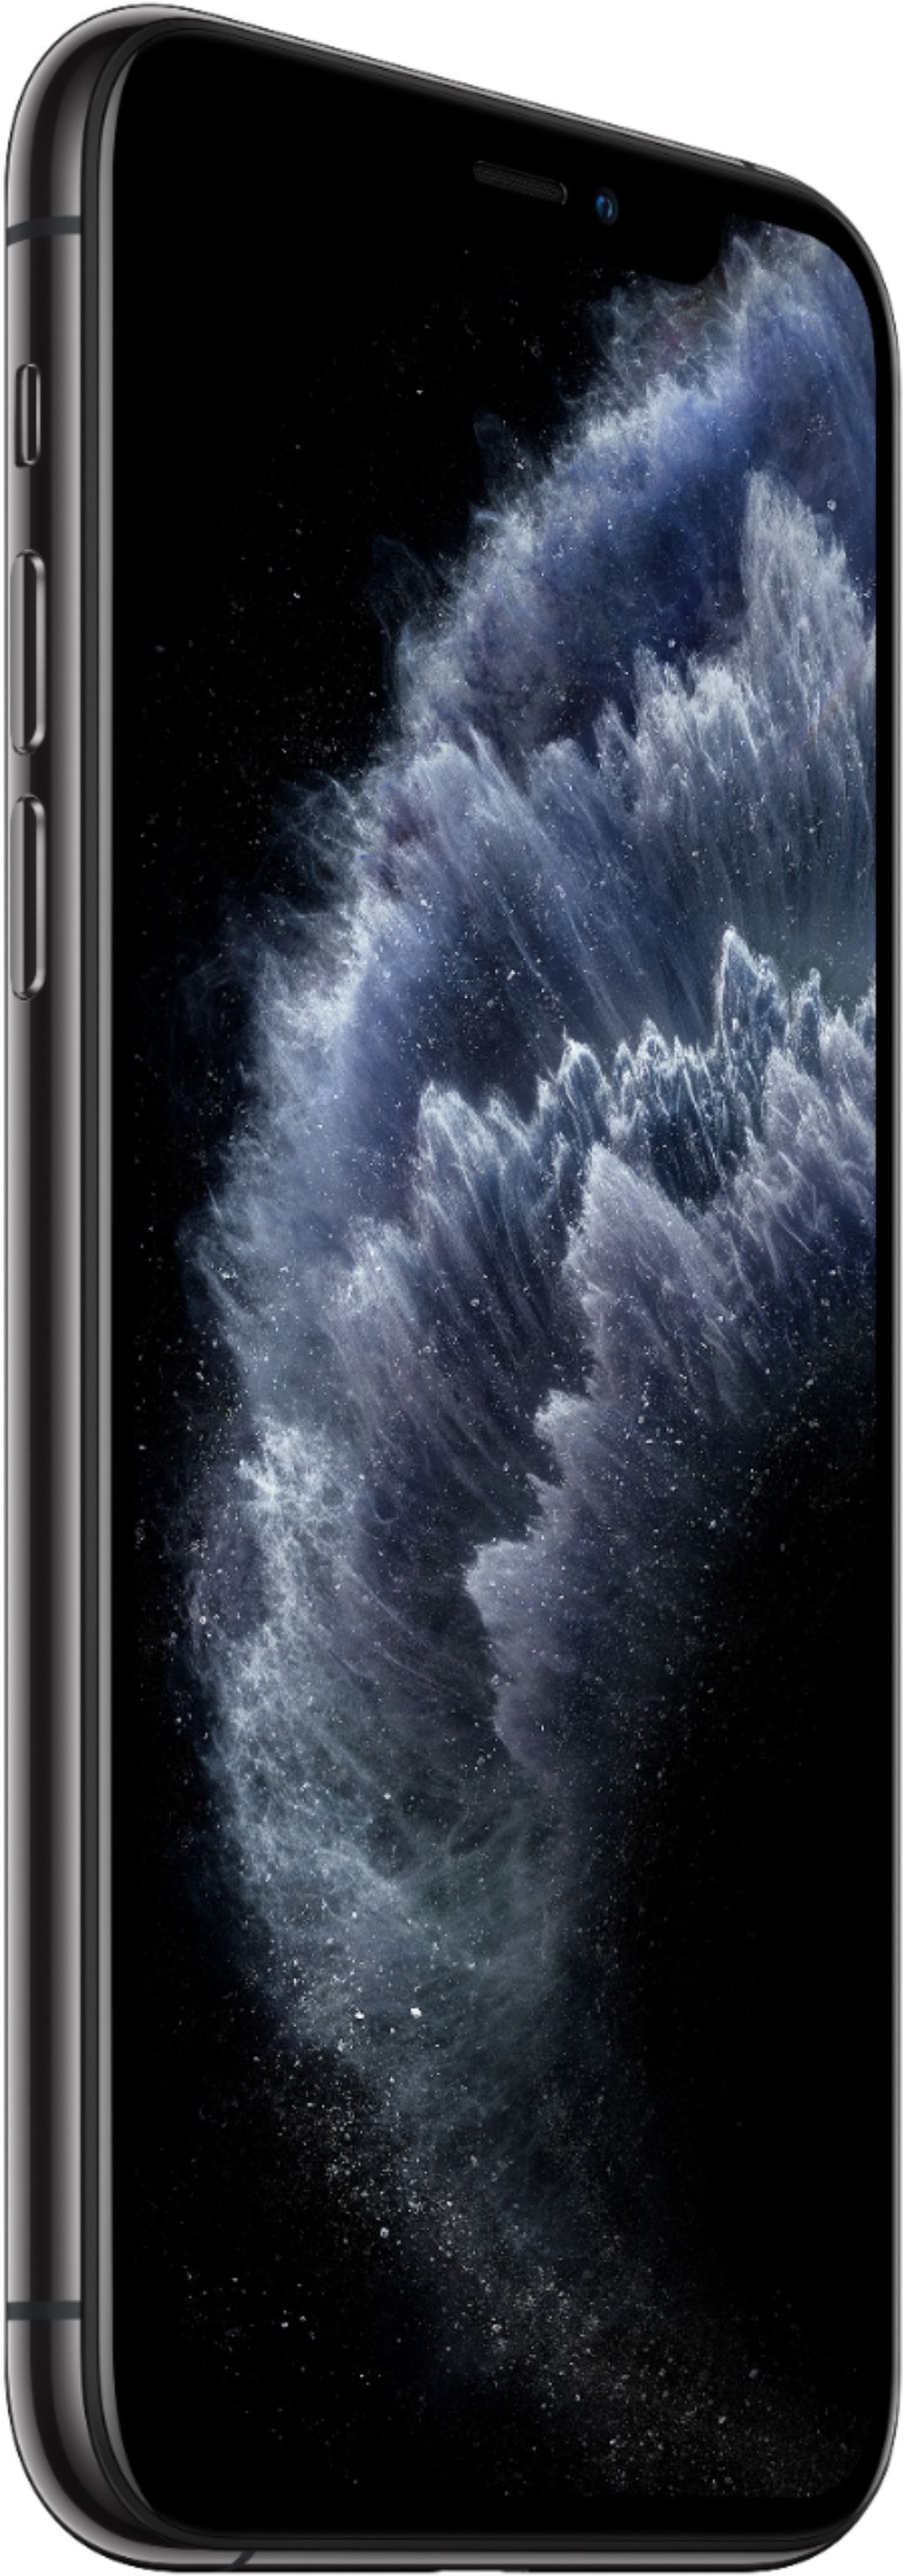 Apple iPhone 11 Pro 256GB Space Gray (Verizon) MWCM2LL/A - Best Buy